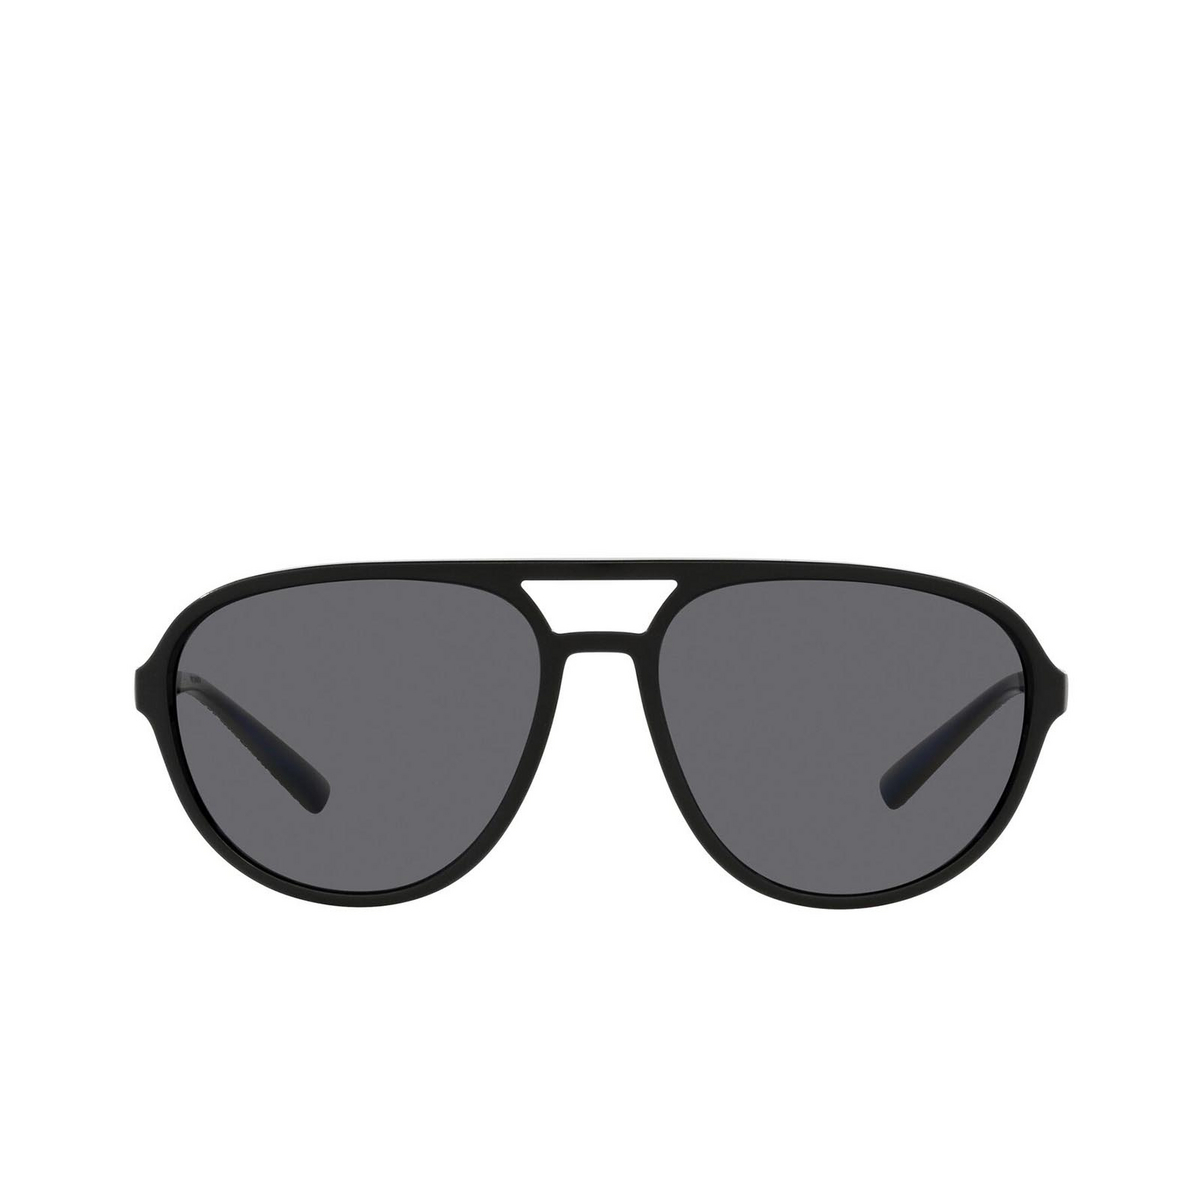 Dolce & Gabbana® Aviator Sunglasses: DG6150 color Matte Black 252581 - front view.